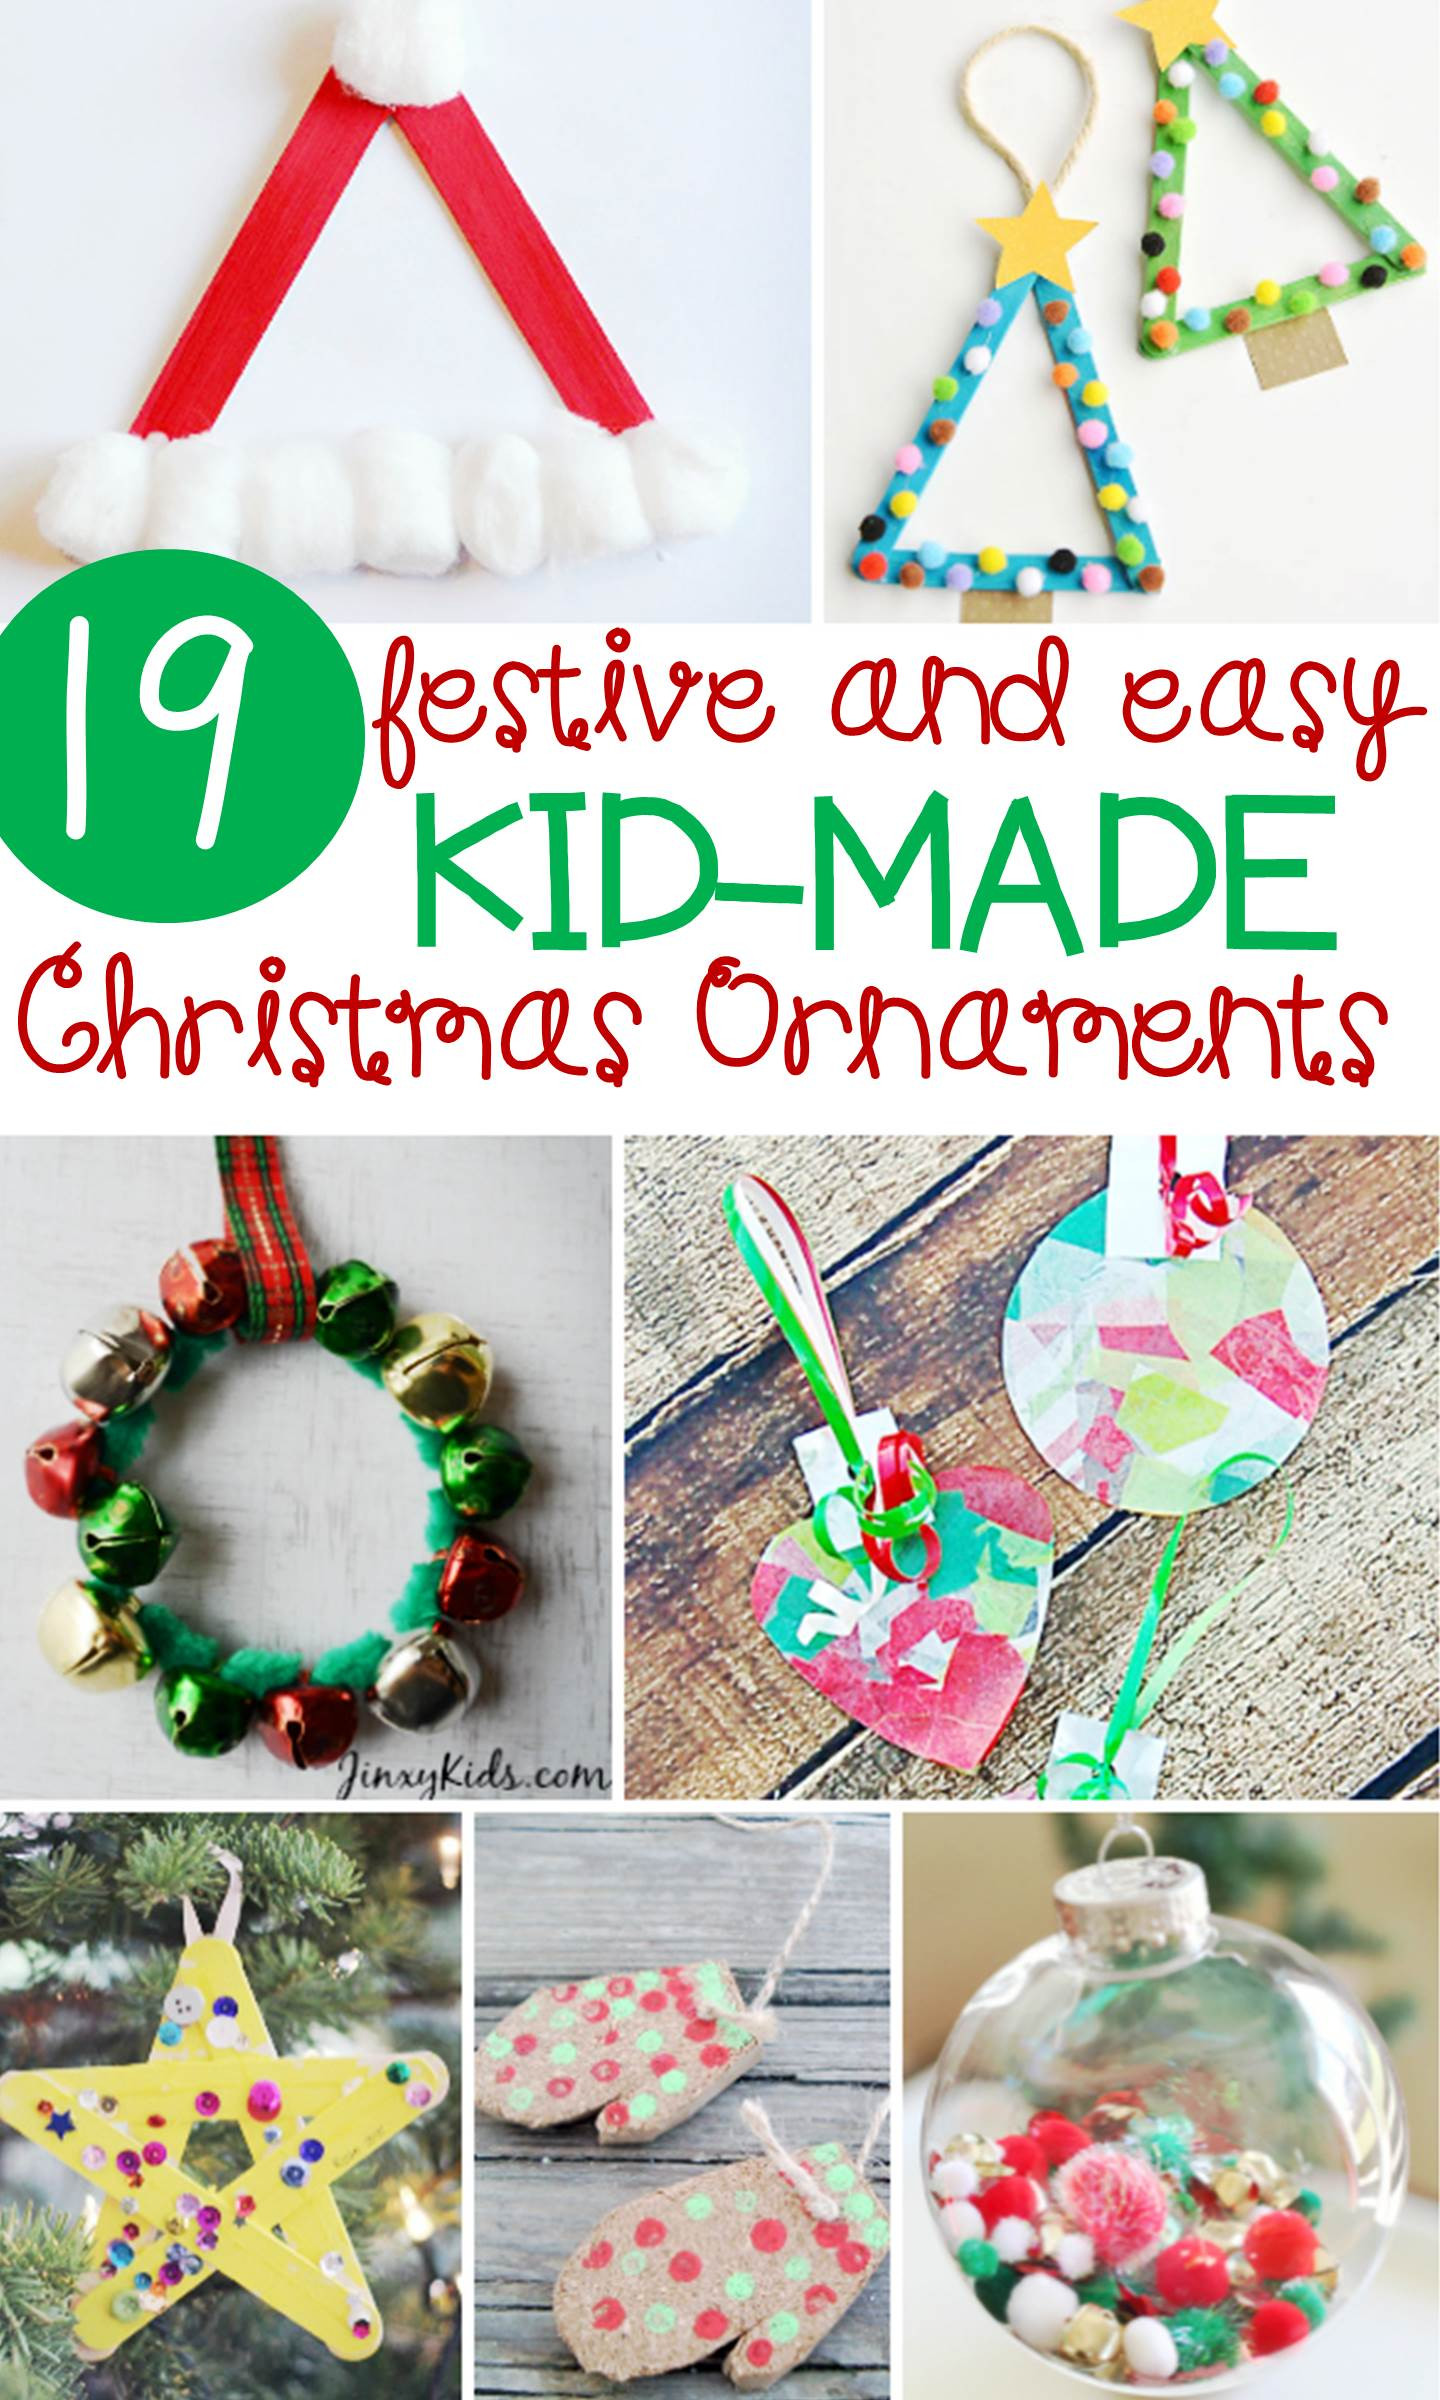 Preschool Christmas Ornament Craft Ideas
 Festive and Simple Kids Christmas Ornaments The